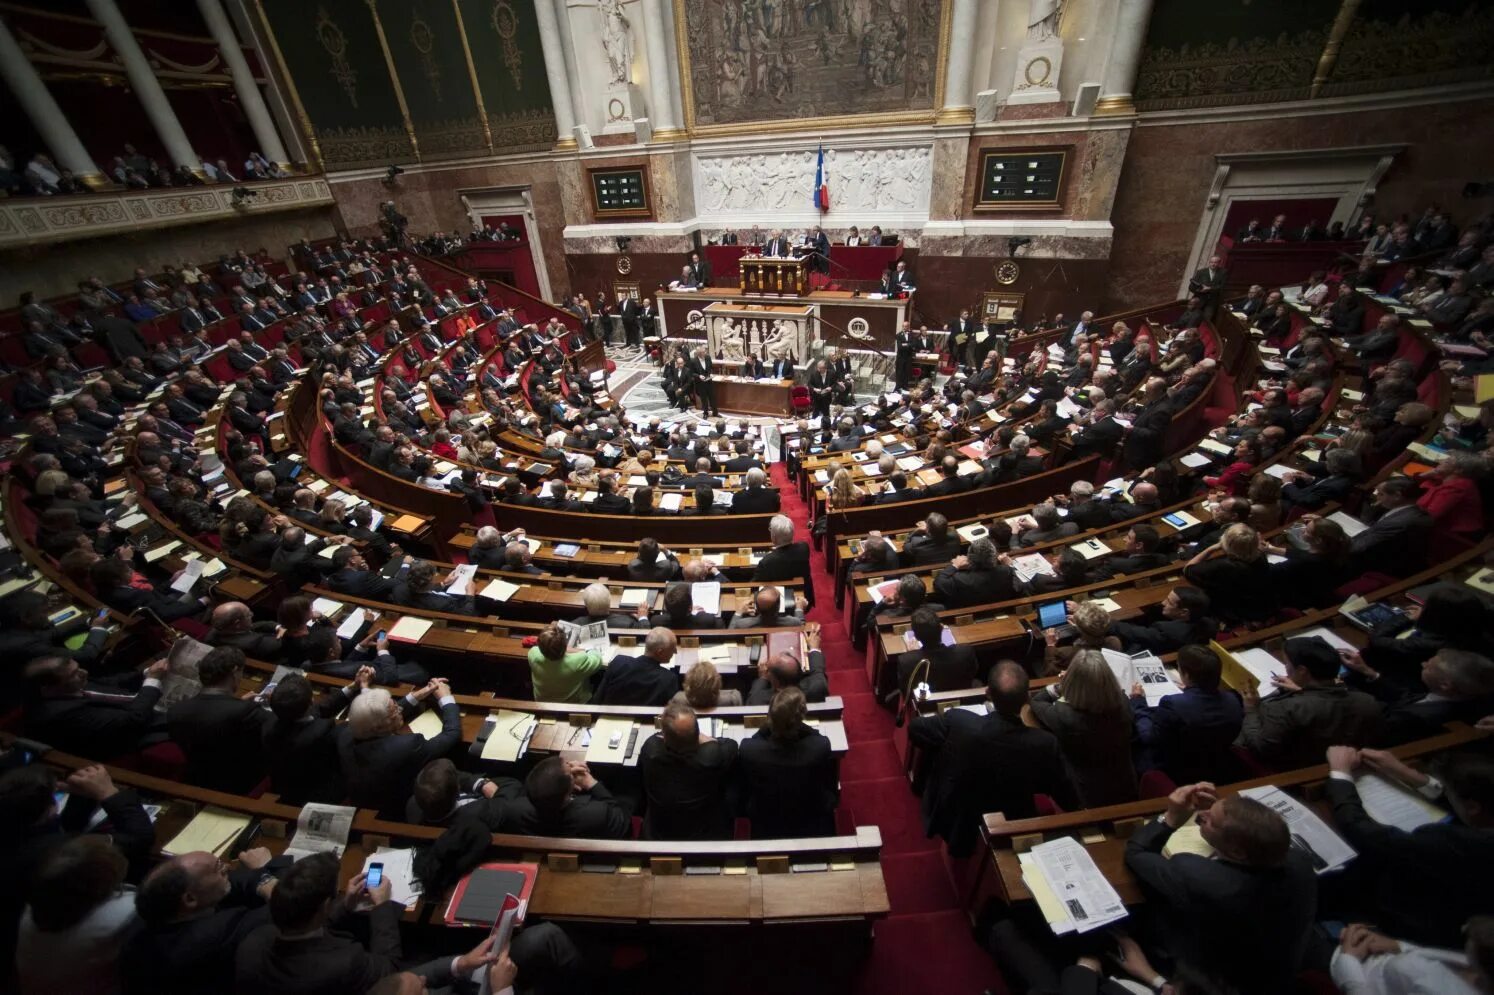 Высший орган парламента. Палаты парламента Франции. Палата депутатов Франция. Заседания парламента Франции 1990.